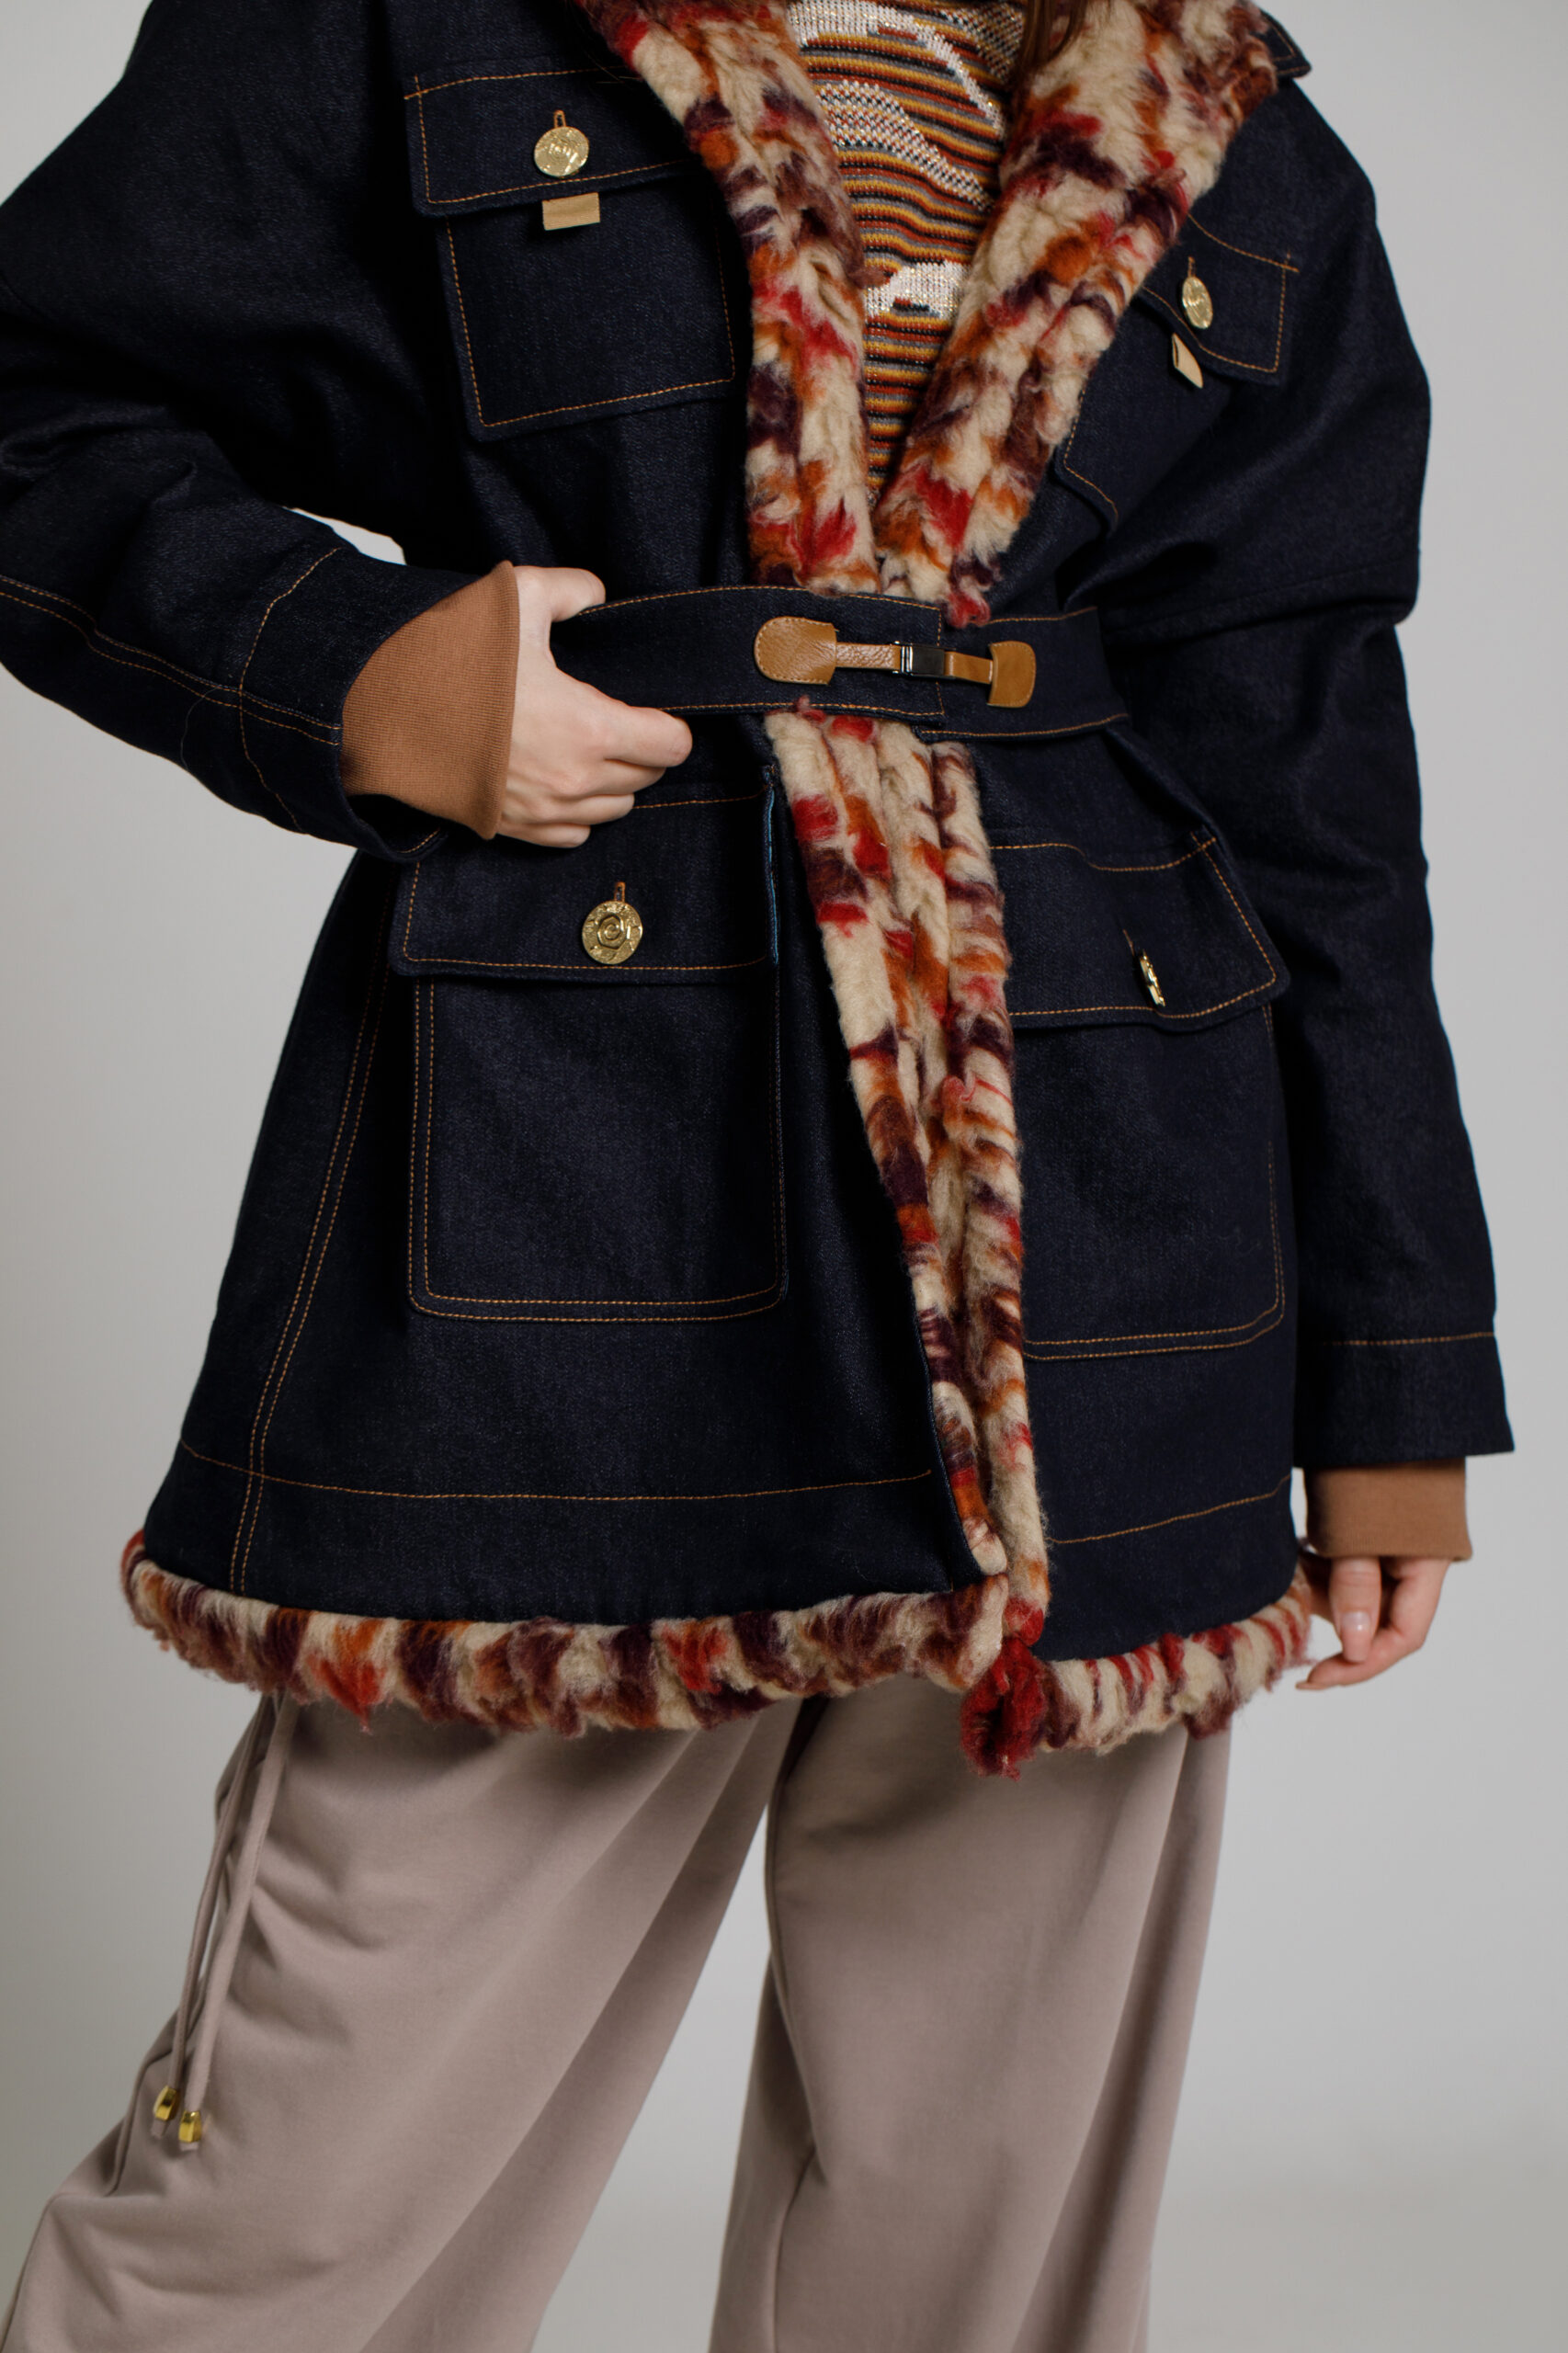 HEDONA jacket in navy blue denim with brick fur. Natural fabrics, original design, handmade embroidery